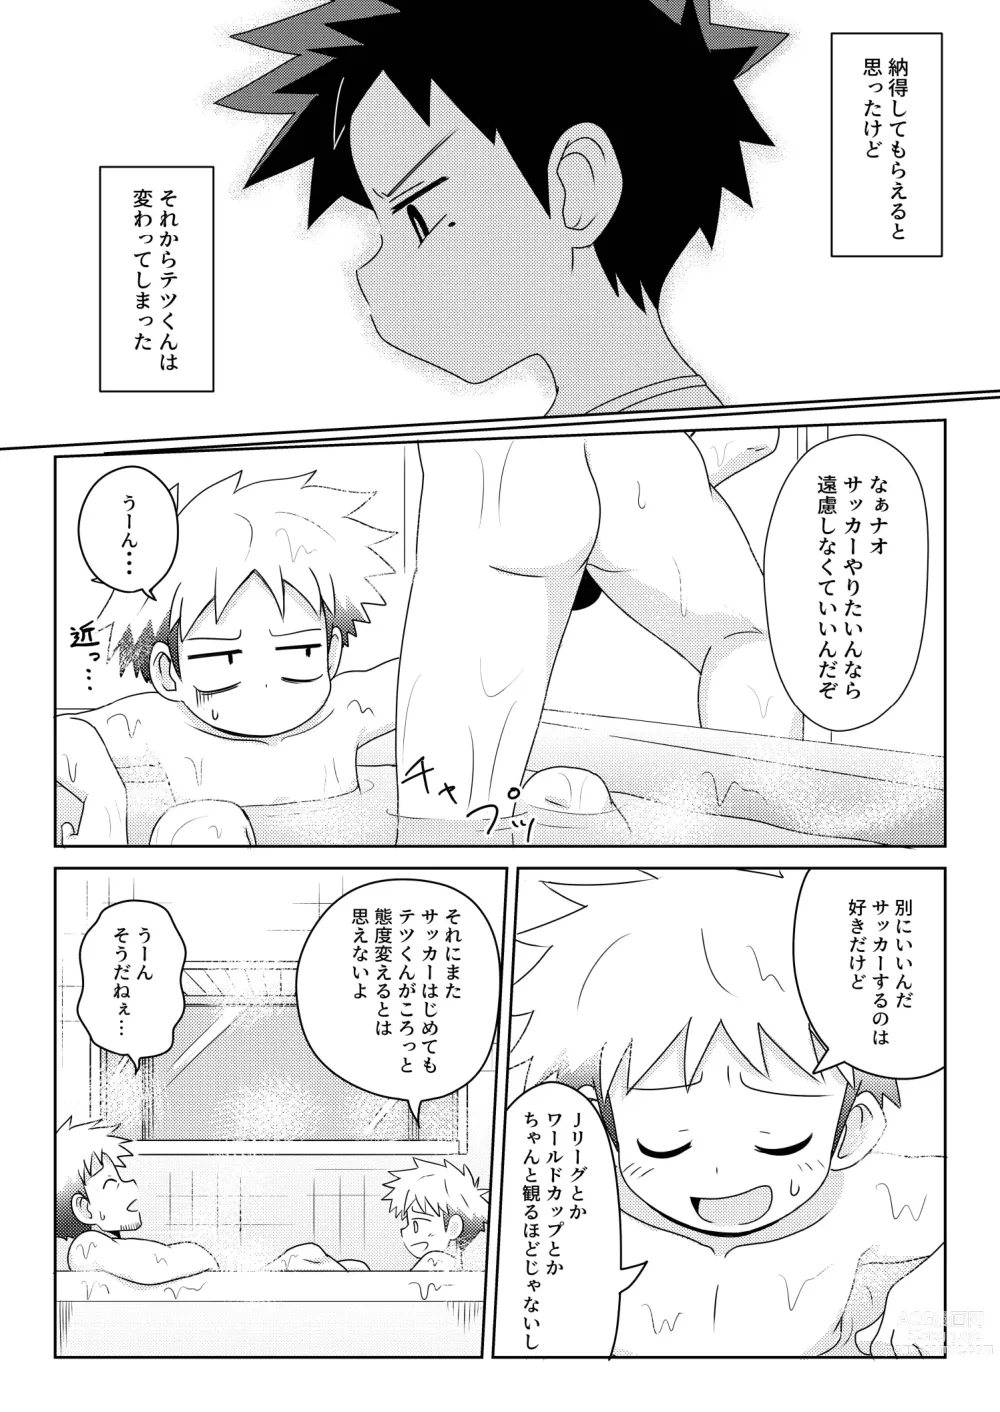 Page 22 of doujinshi Boku wa hanaya no musuko Introduction